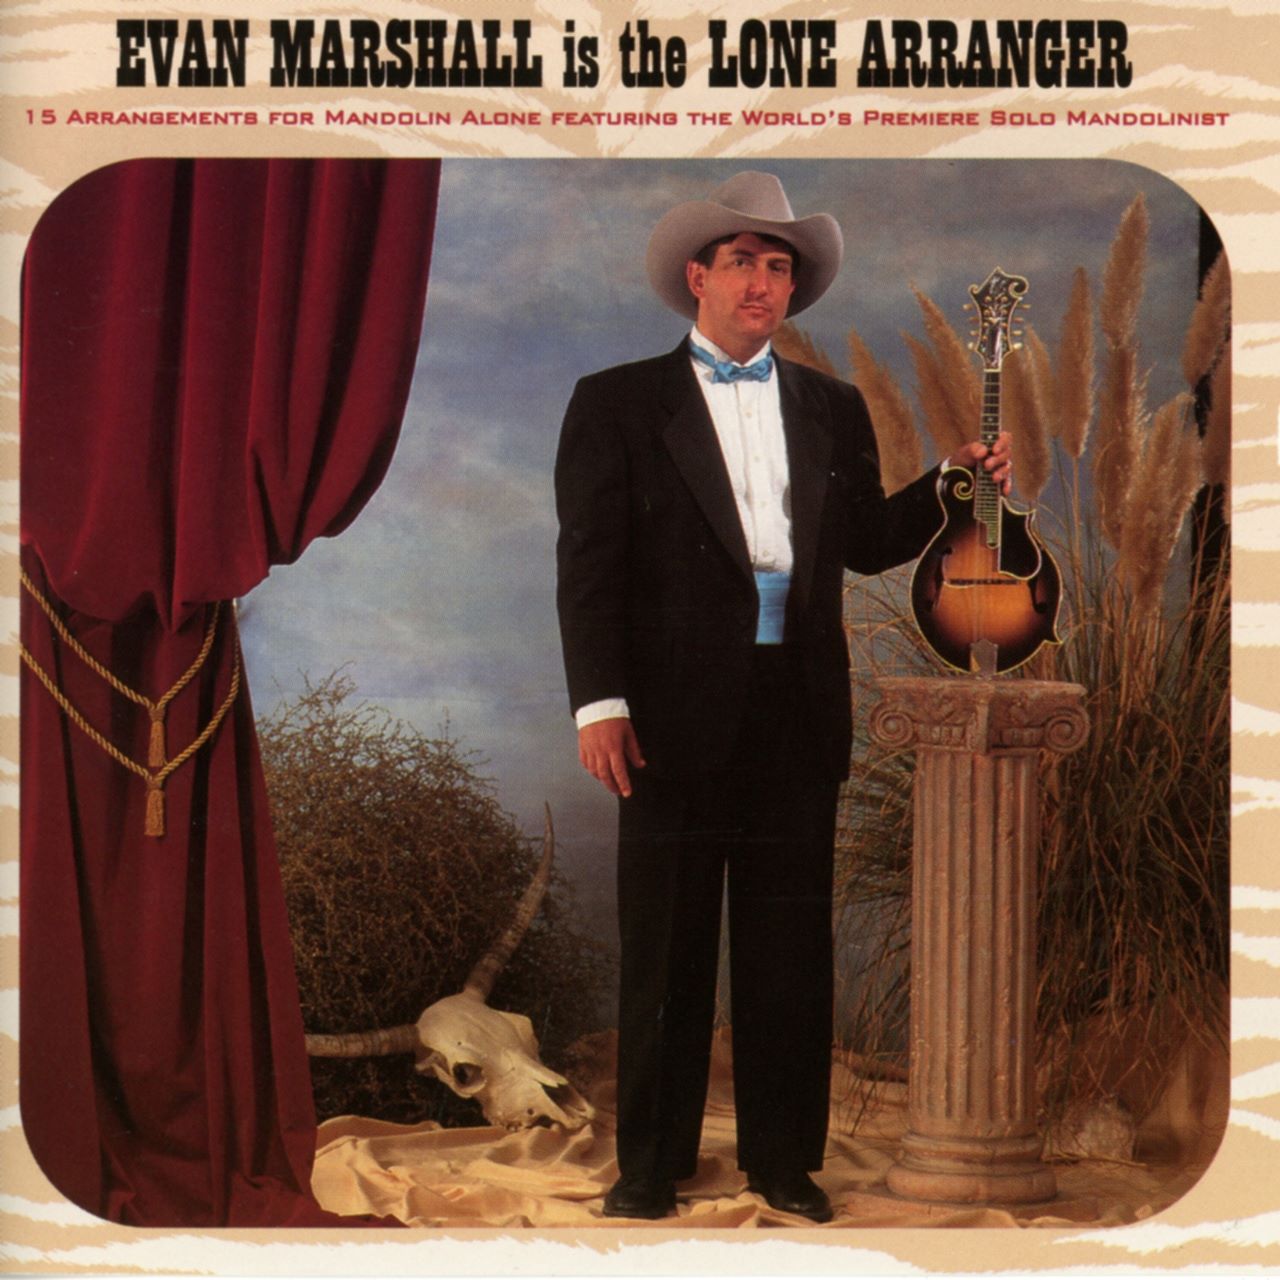 Evan Marshall - The Lone Arranger cover album